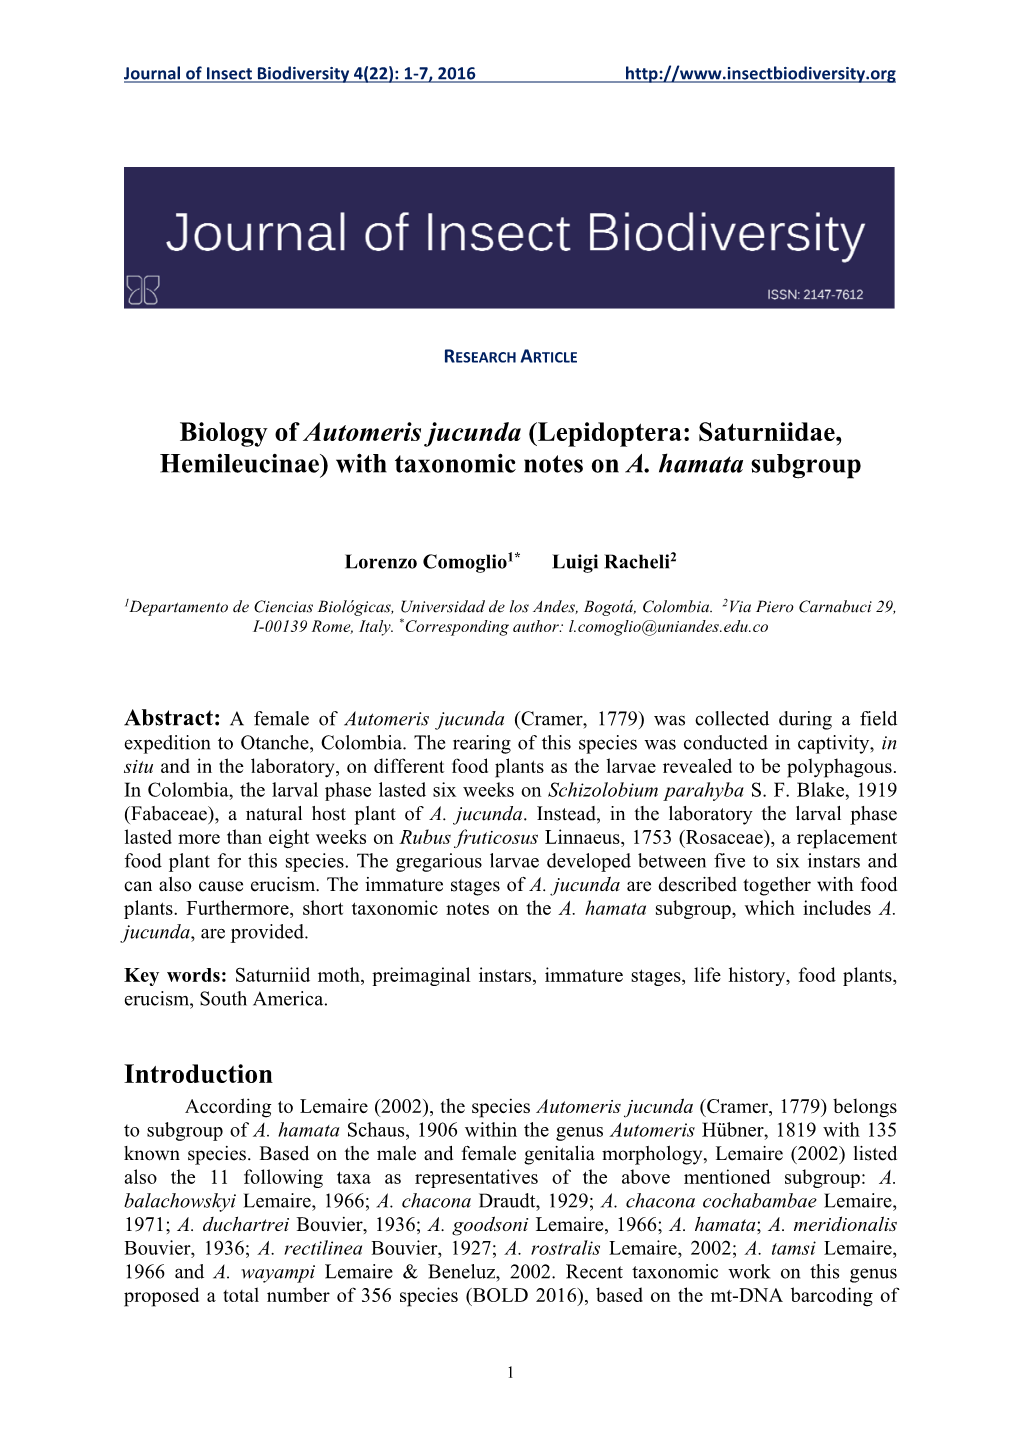 Biology of Automeris Jucunda (Lepidoptera: Saturniidae, Hemileucinae) with Taxonomic Notes on A